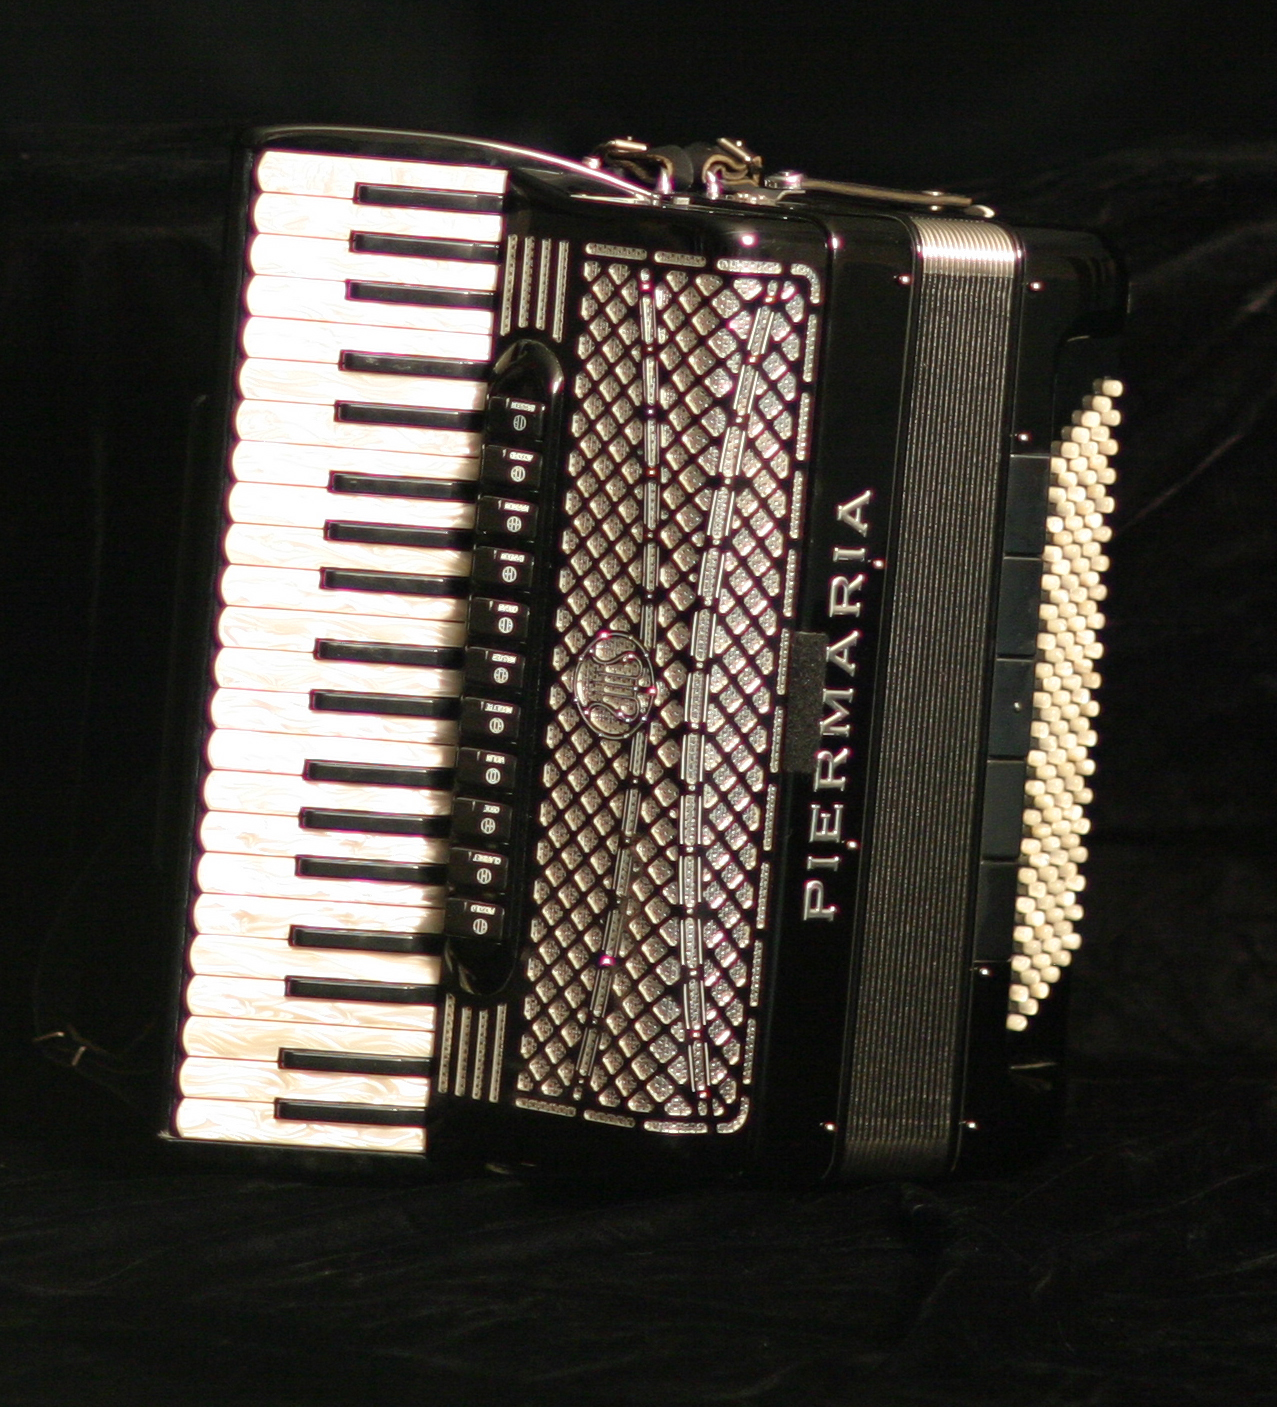 Yosifah plays accordion as well as qanun with Al 'Azifoon